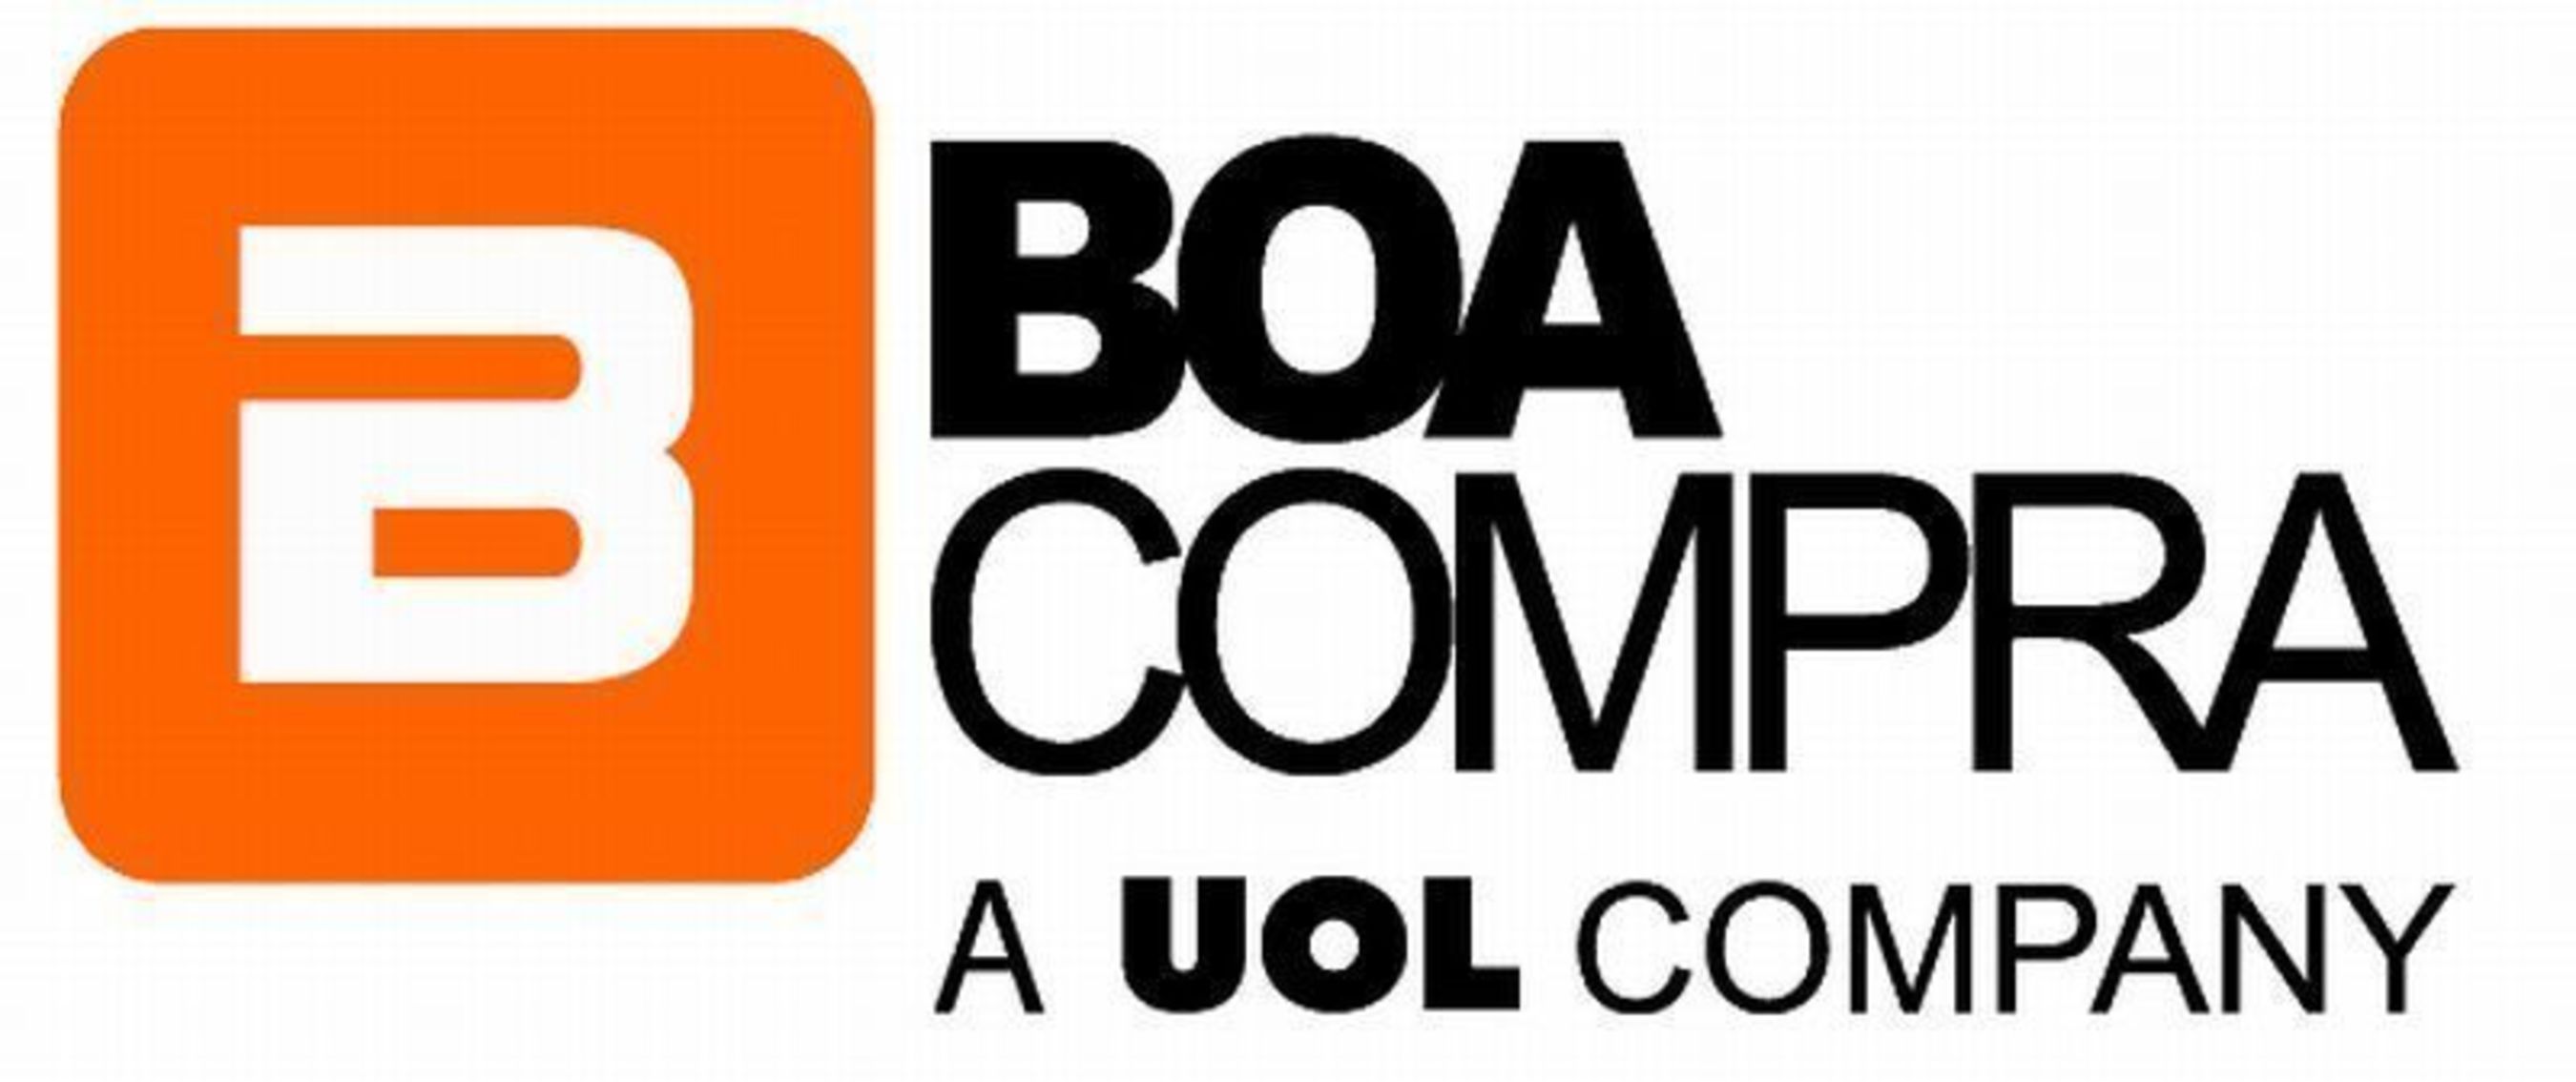 UOL BoaCompra Logo (PRNewsFoto/UOL BoaCompra)